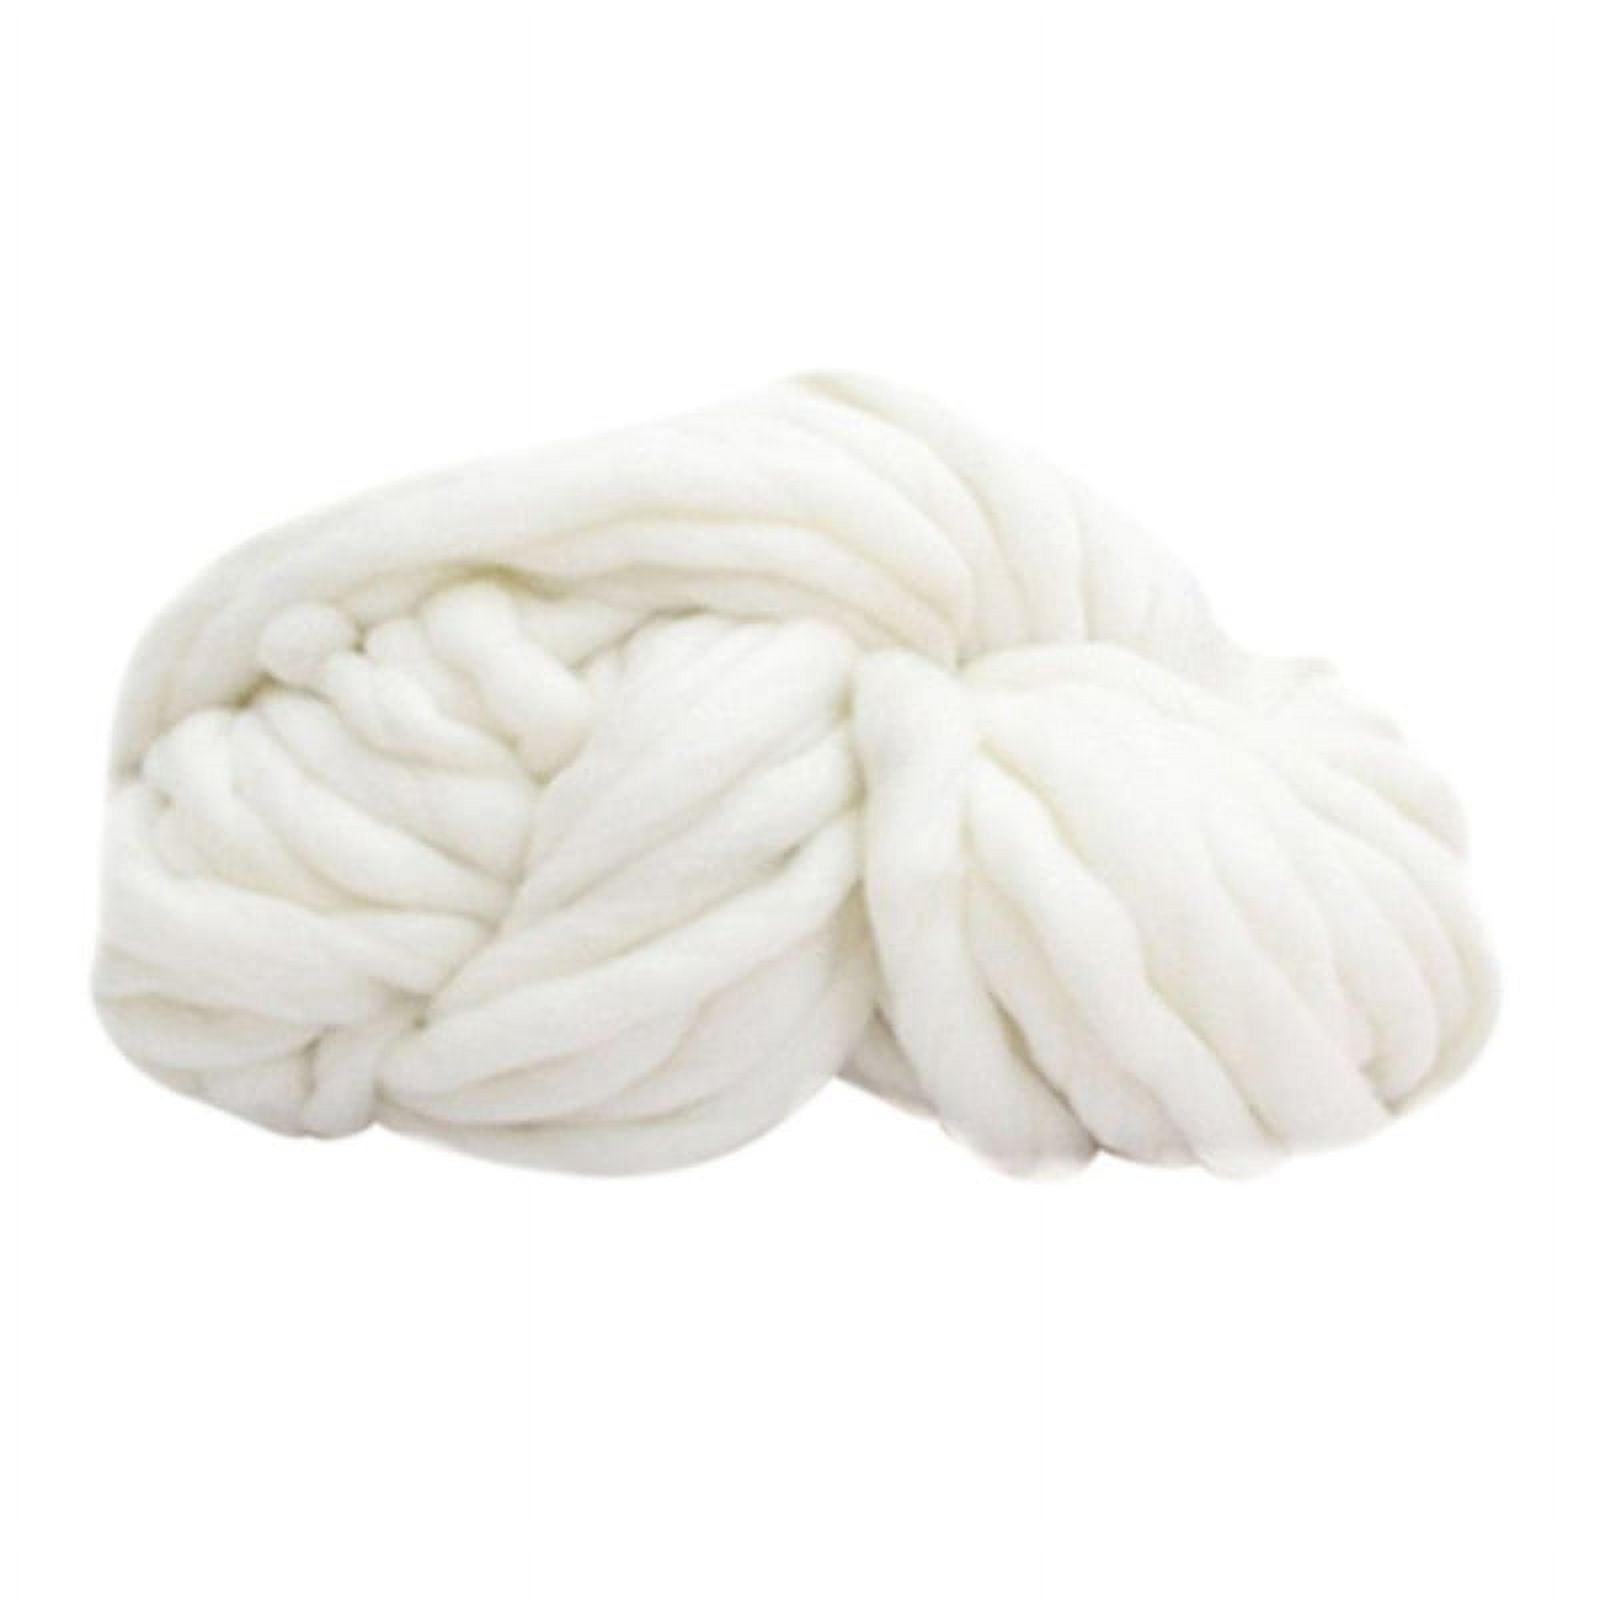 100% Non-Mulesed Chunky Wool Yarn Big Chunky Yarn Massive Yarn Extreme Arm  Knitting Giant Chunky Knit Blankets Throws (250g-0.6lbs, Milk White)